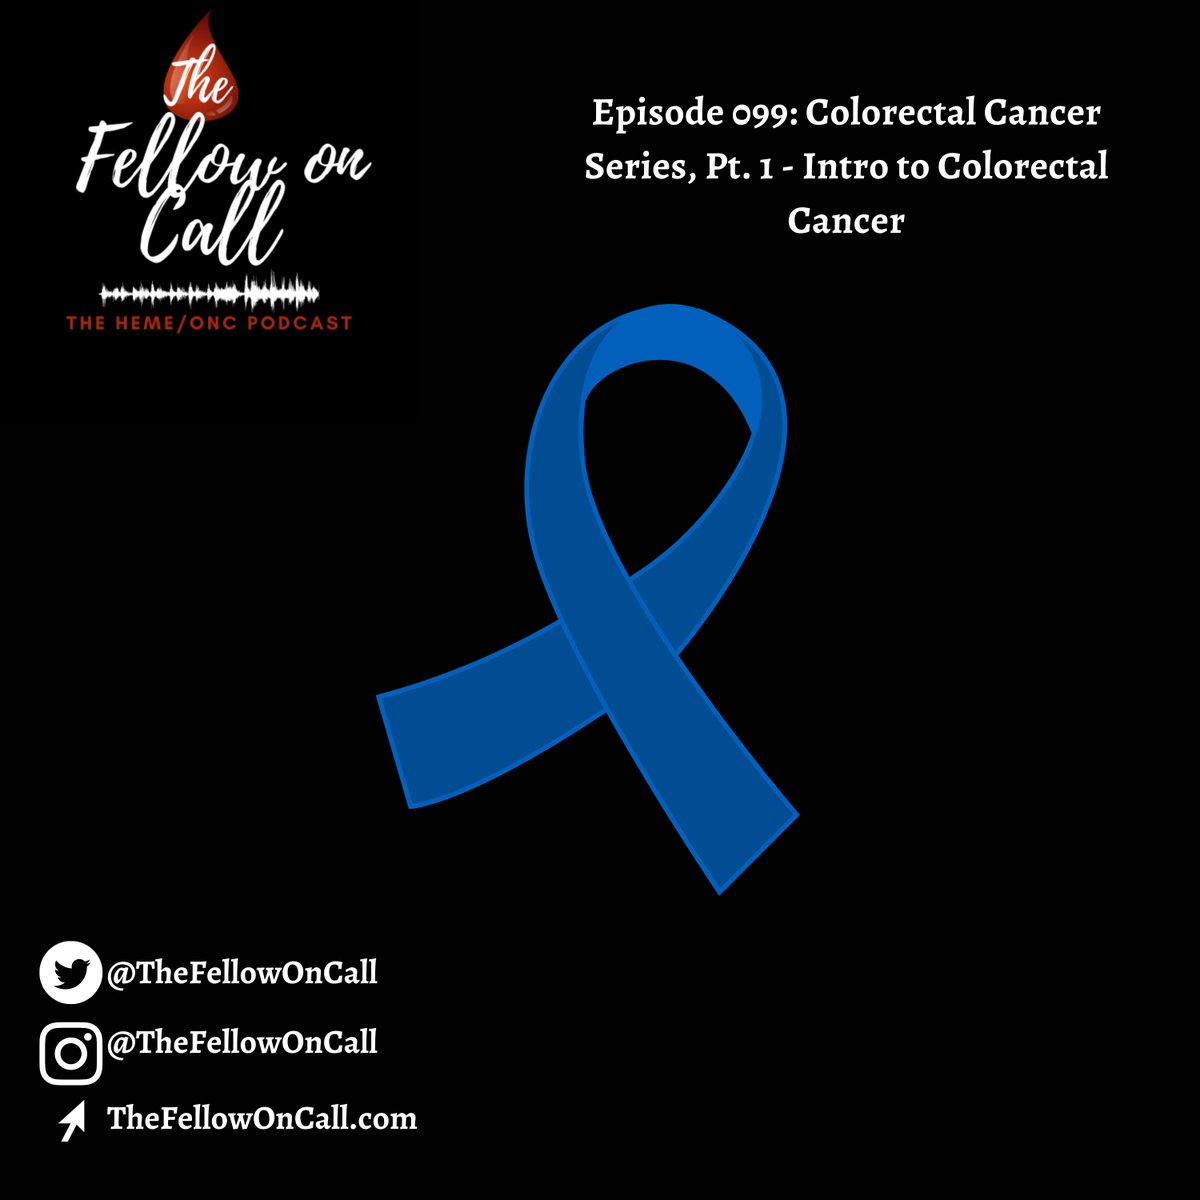 New episode and series alert! Link in bio!
@UABHemOncFellow
@HemeOncGators
@DartmouthHemOnc
@SinaiHemeOnc
@UMMCHemeOncFP
@HFHemOncFellows
@UTSWHemeOnc

#MedEd #MedicalEducation #Hematology #Oncology #HemeOnc #Podcast #MedicalStudent #Residency #InternalMedicine